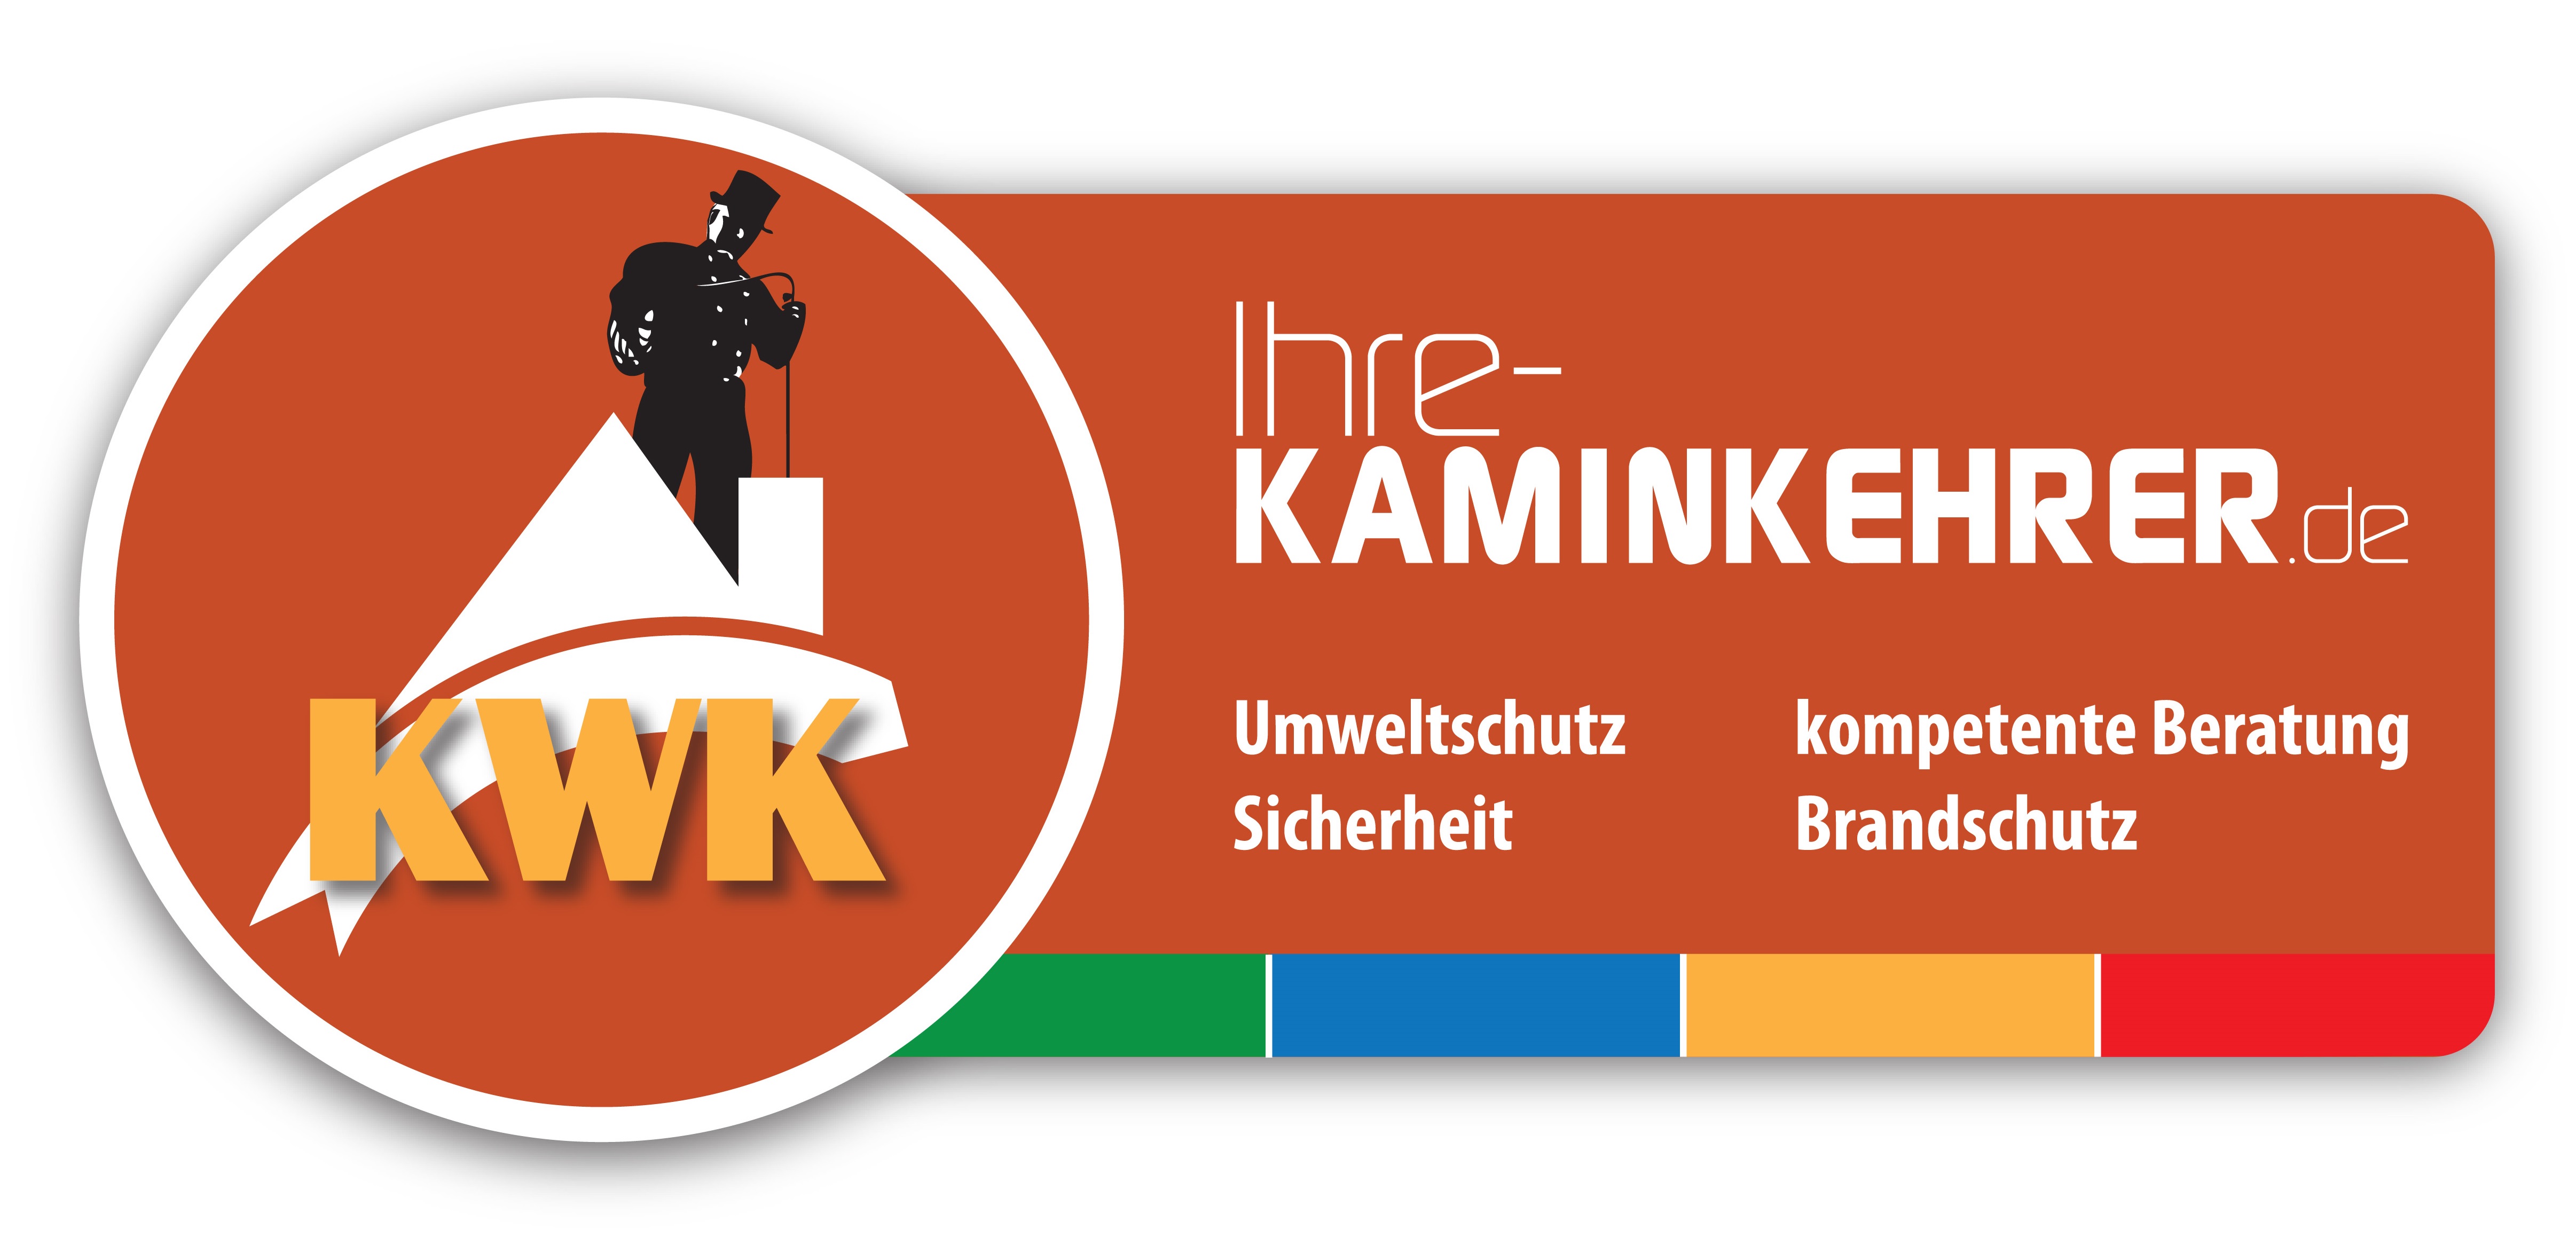 KWK - Ihre Kaminkehrer OHG - Sponsor